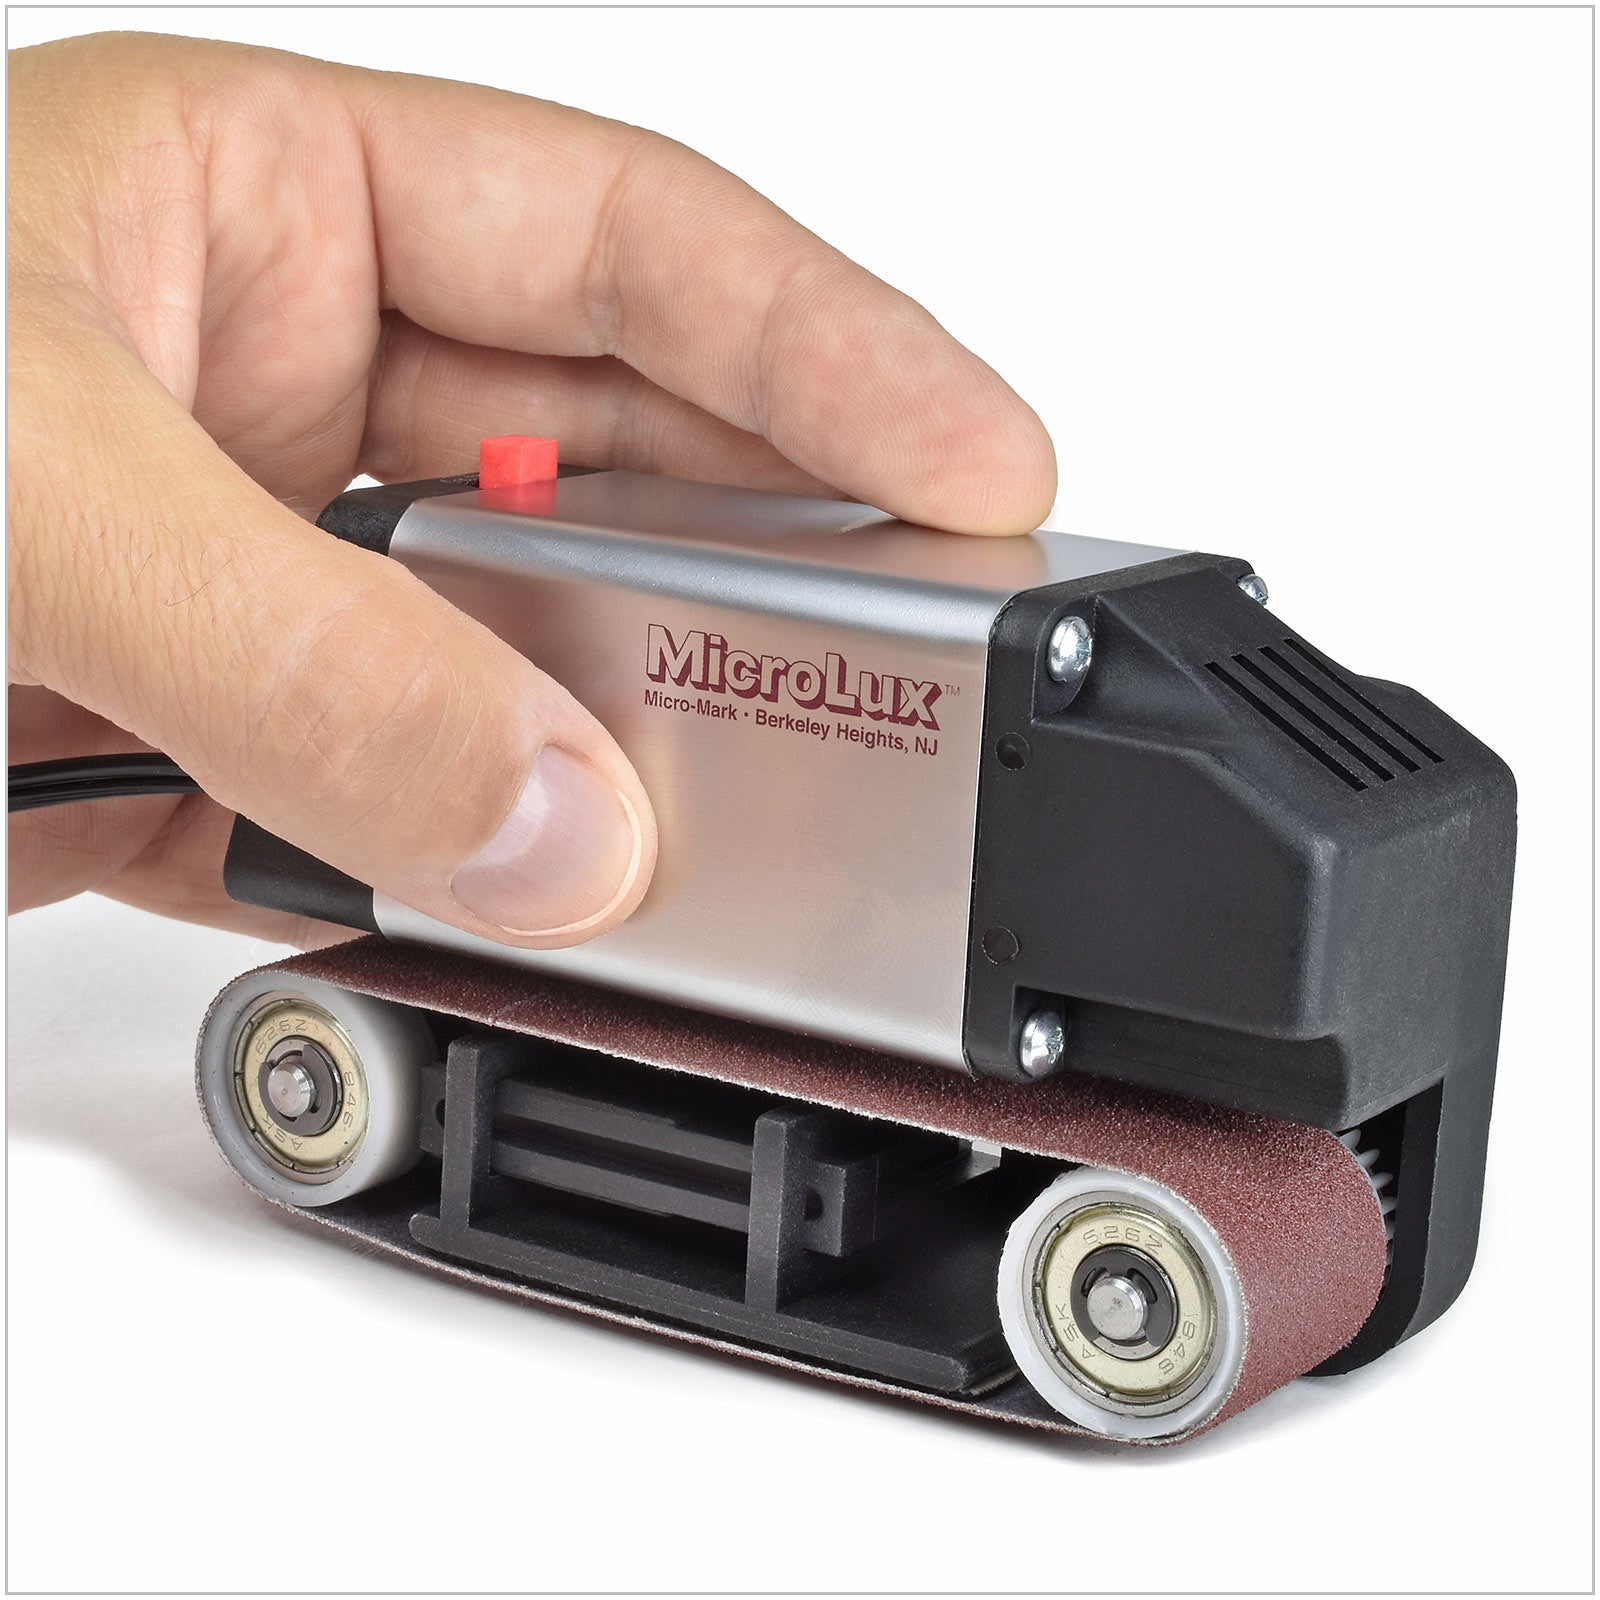 Cosplay Mini Belt Sander Package - Micro - Mark Art & Crafting Materials